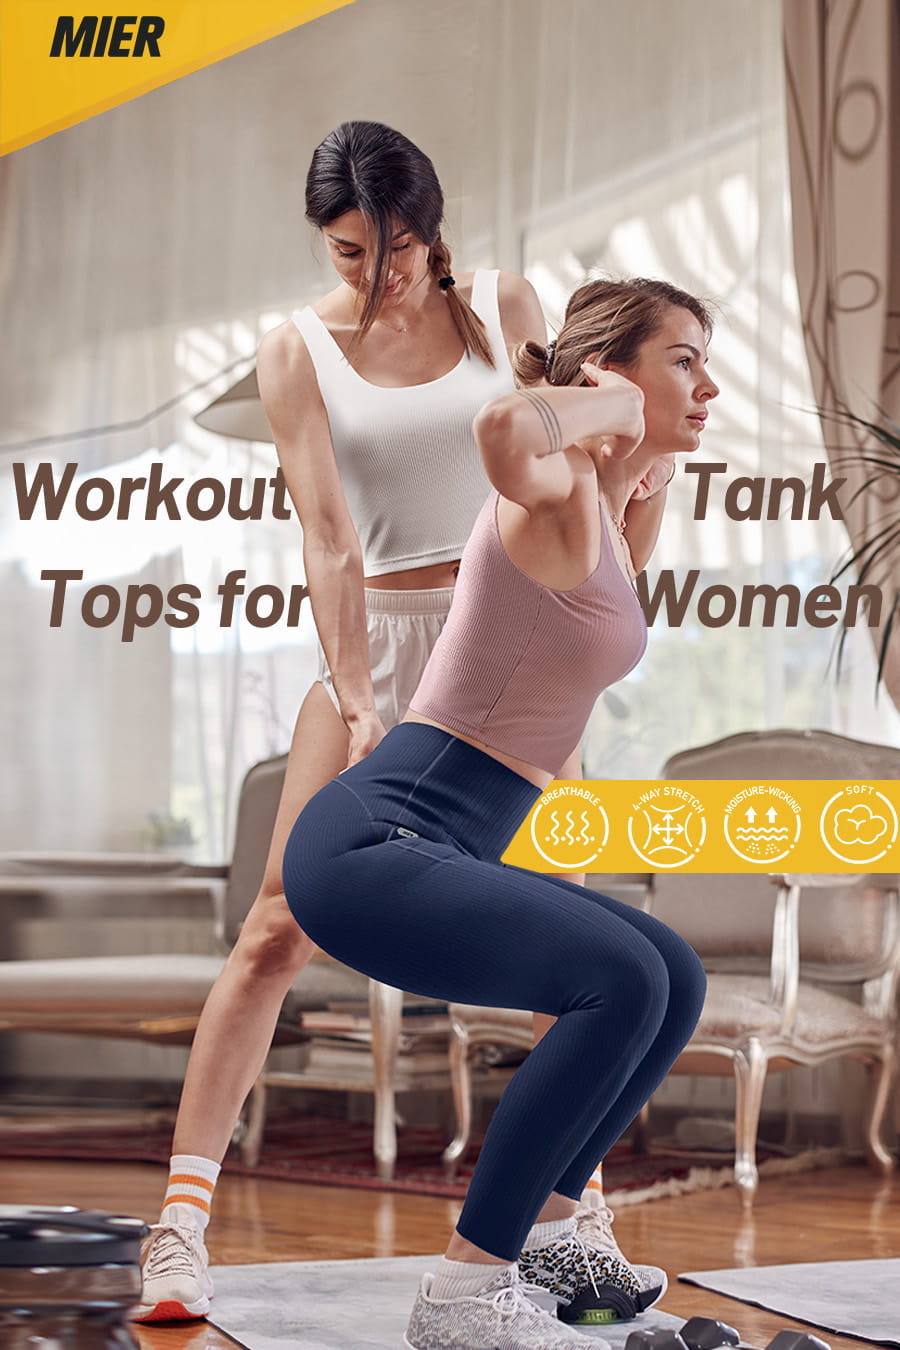 Womens Sports Bras Tank top Yoga Crop Tank Tops Fitness Workout